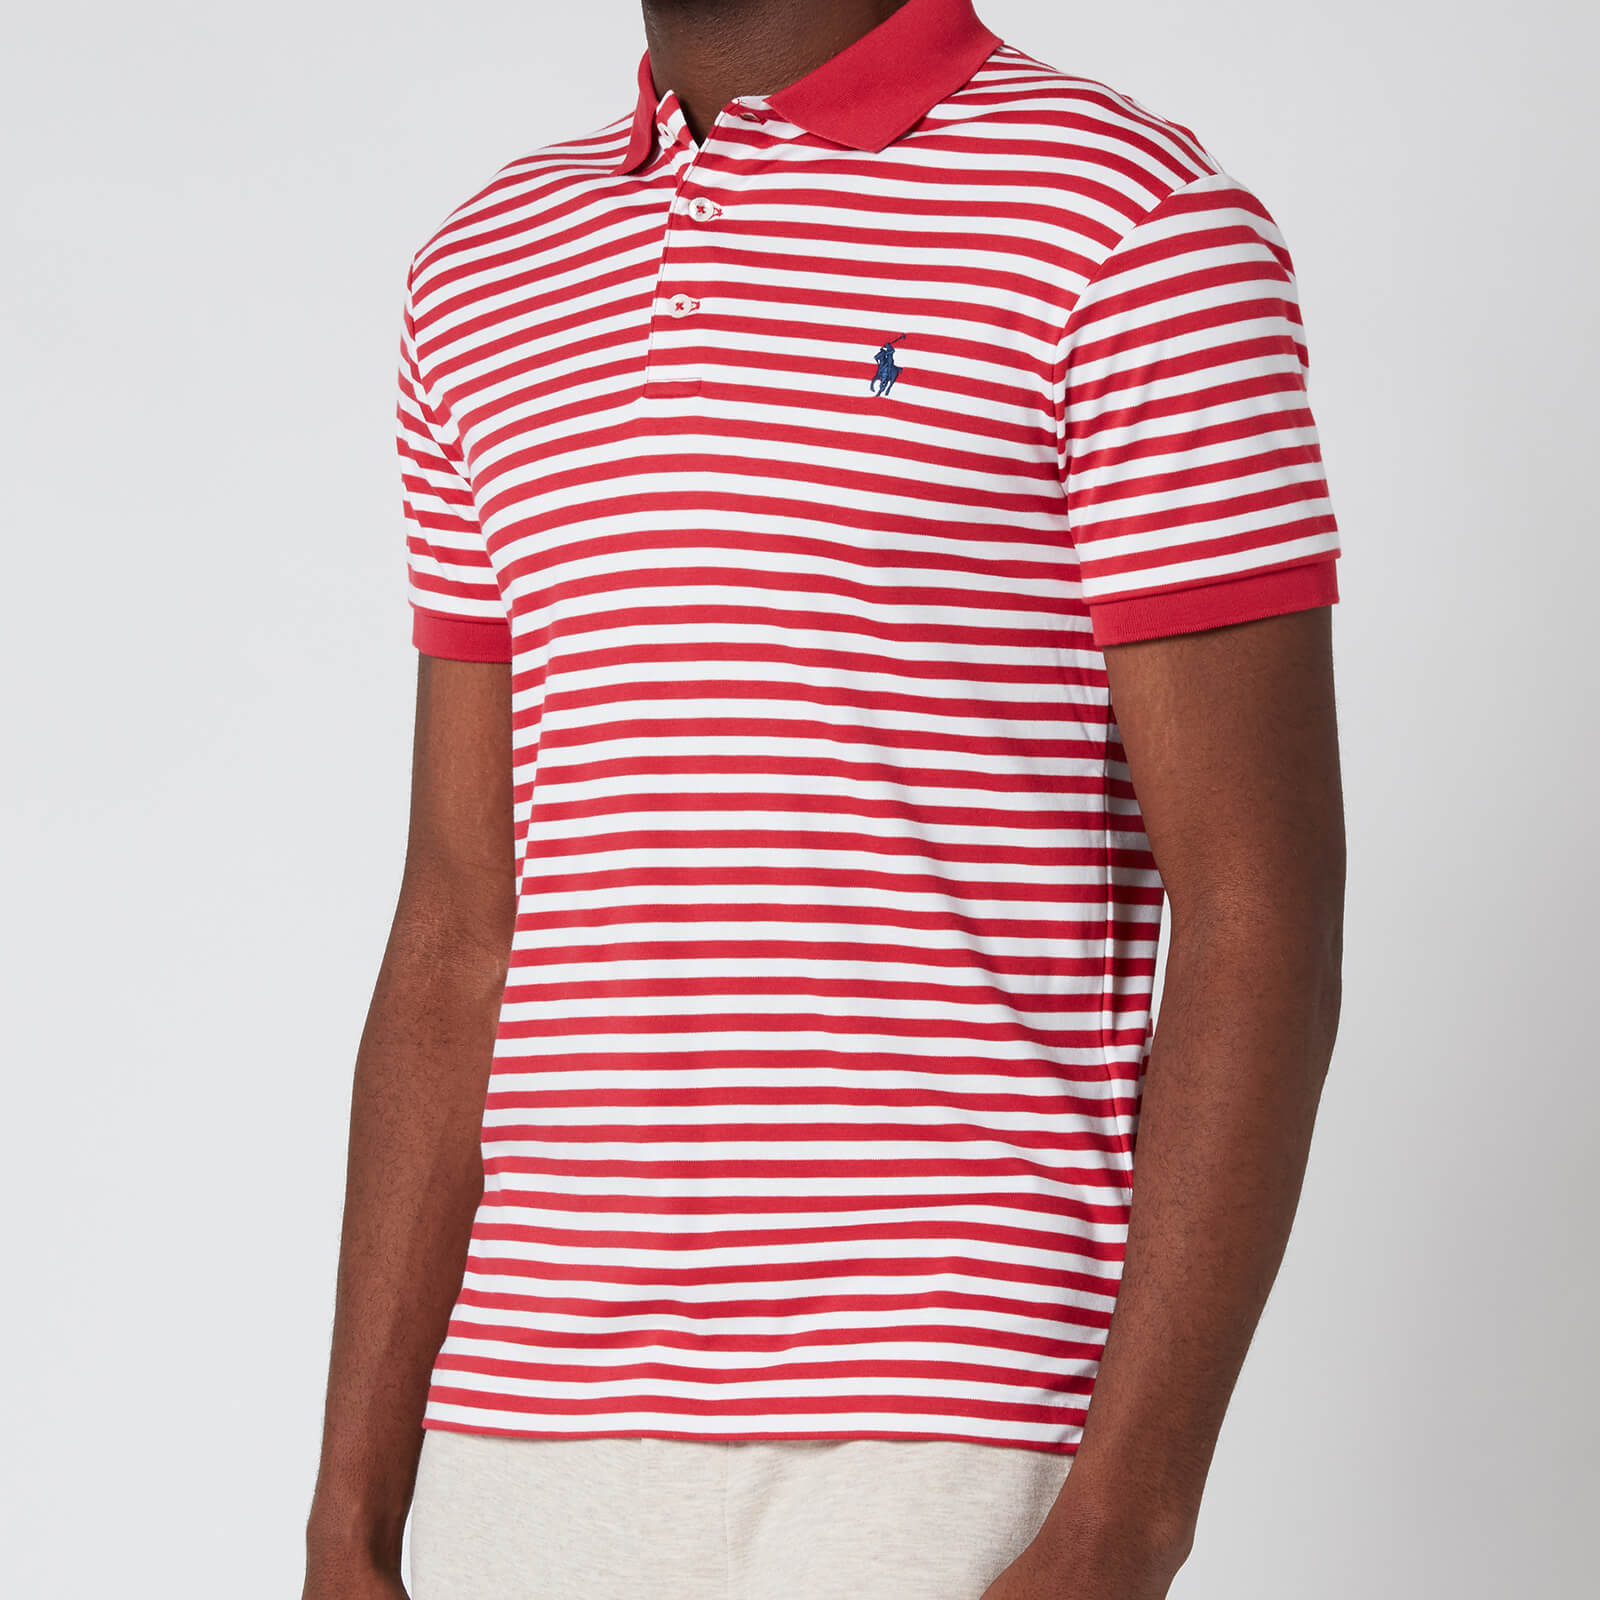 Polo Ralph Lauren Men's Interlock Striped Slim Fit Polo Shirt - Sunrise Red/White - S